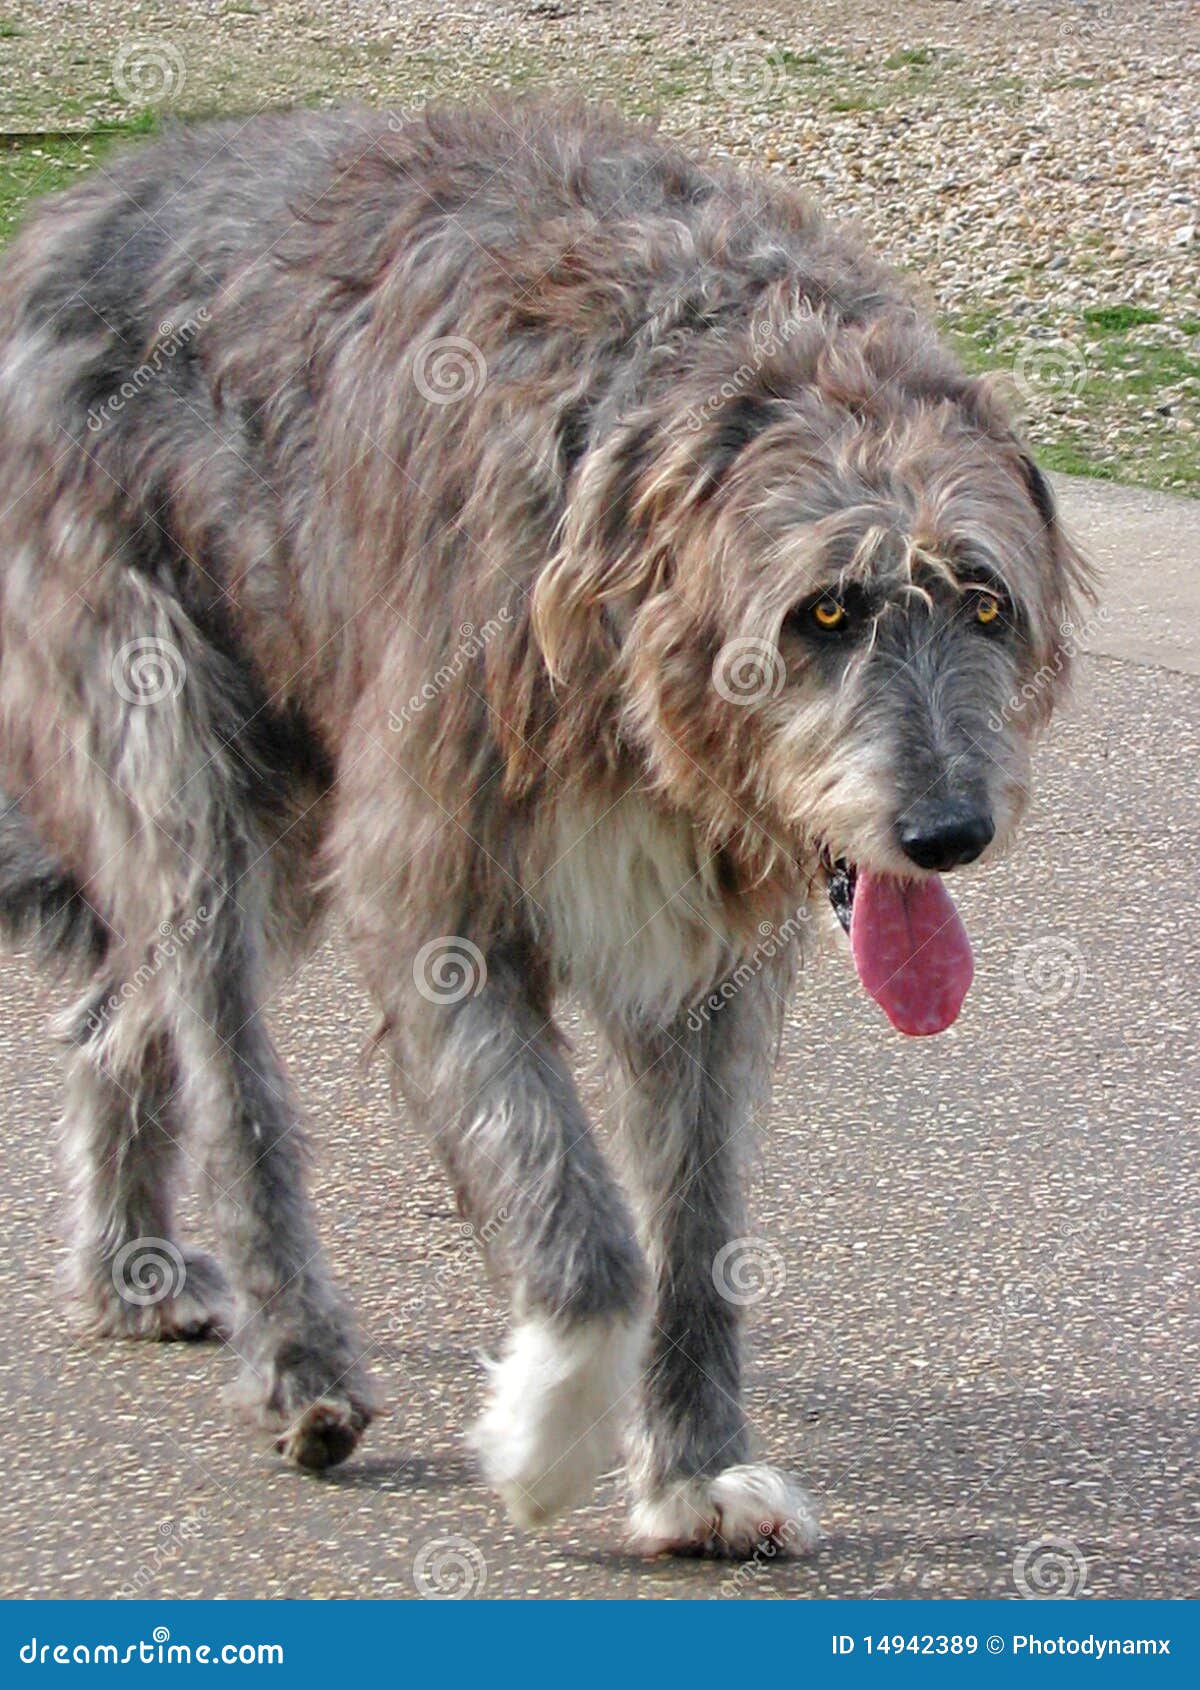 beautiful-irish-wolfhound-dog-14942389.jpg